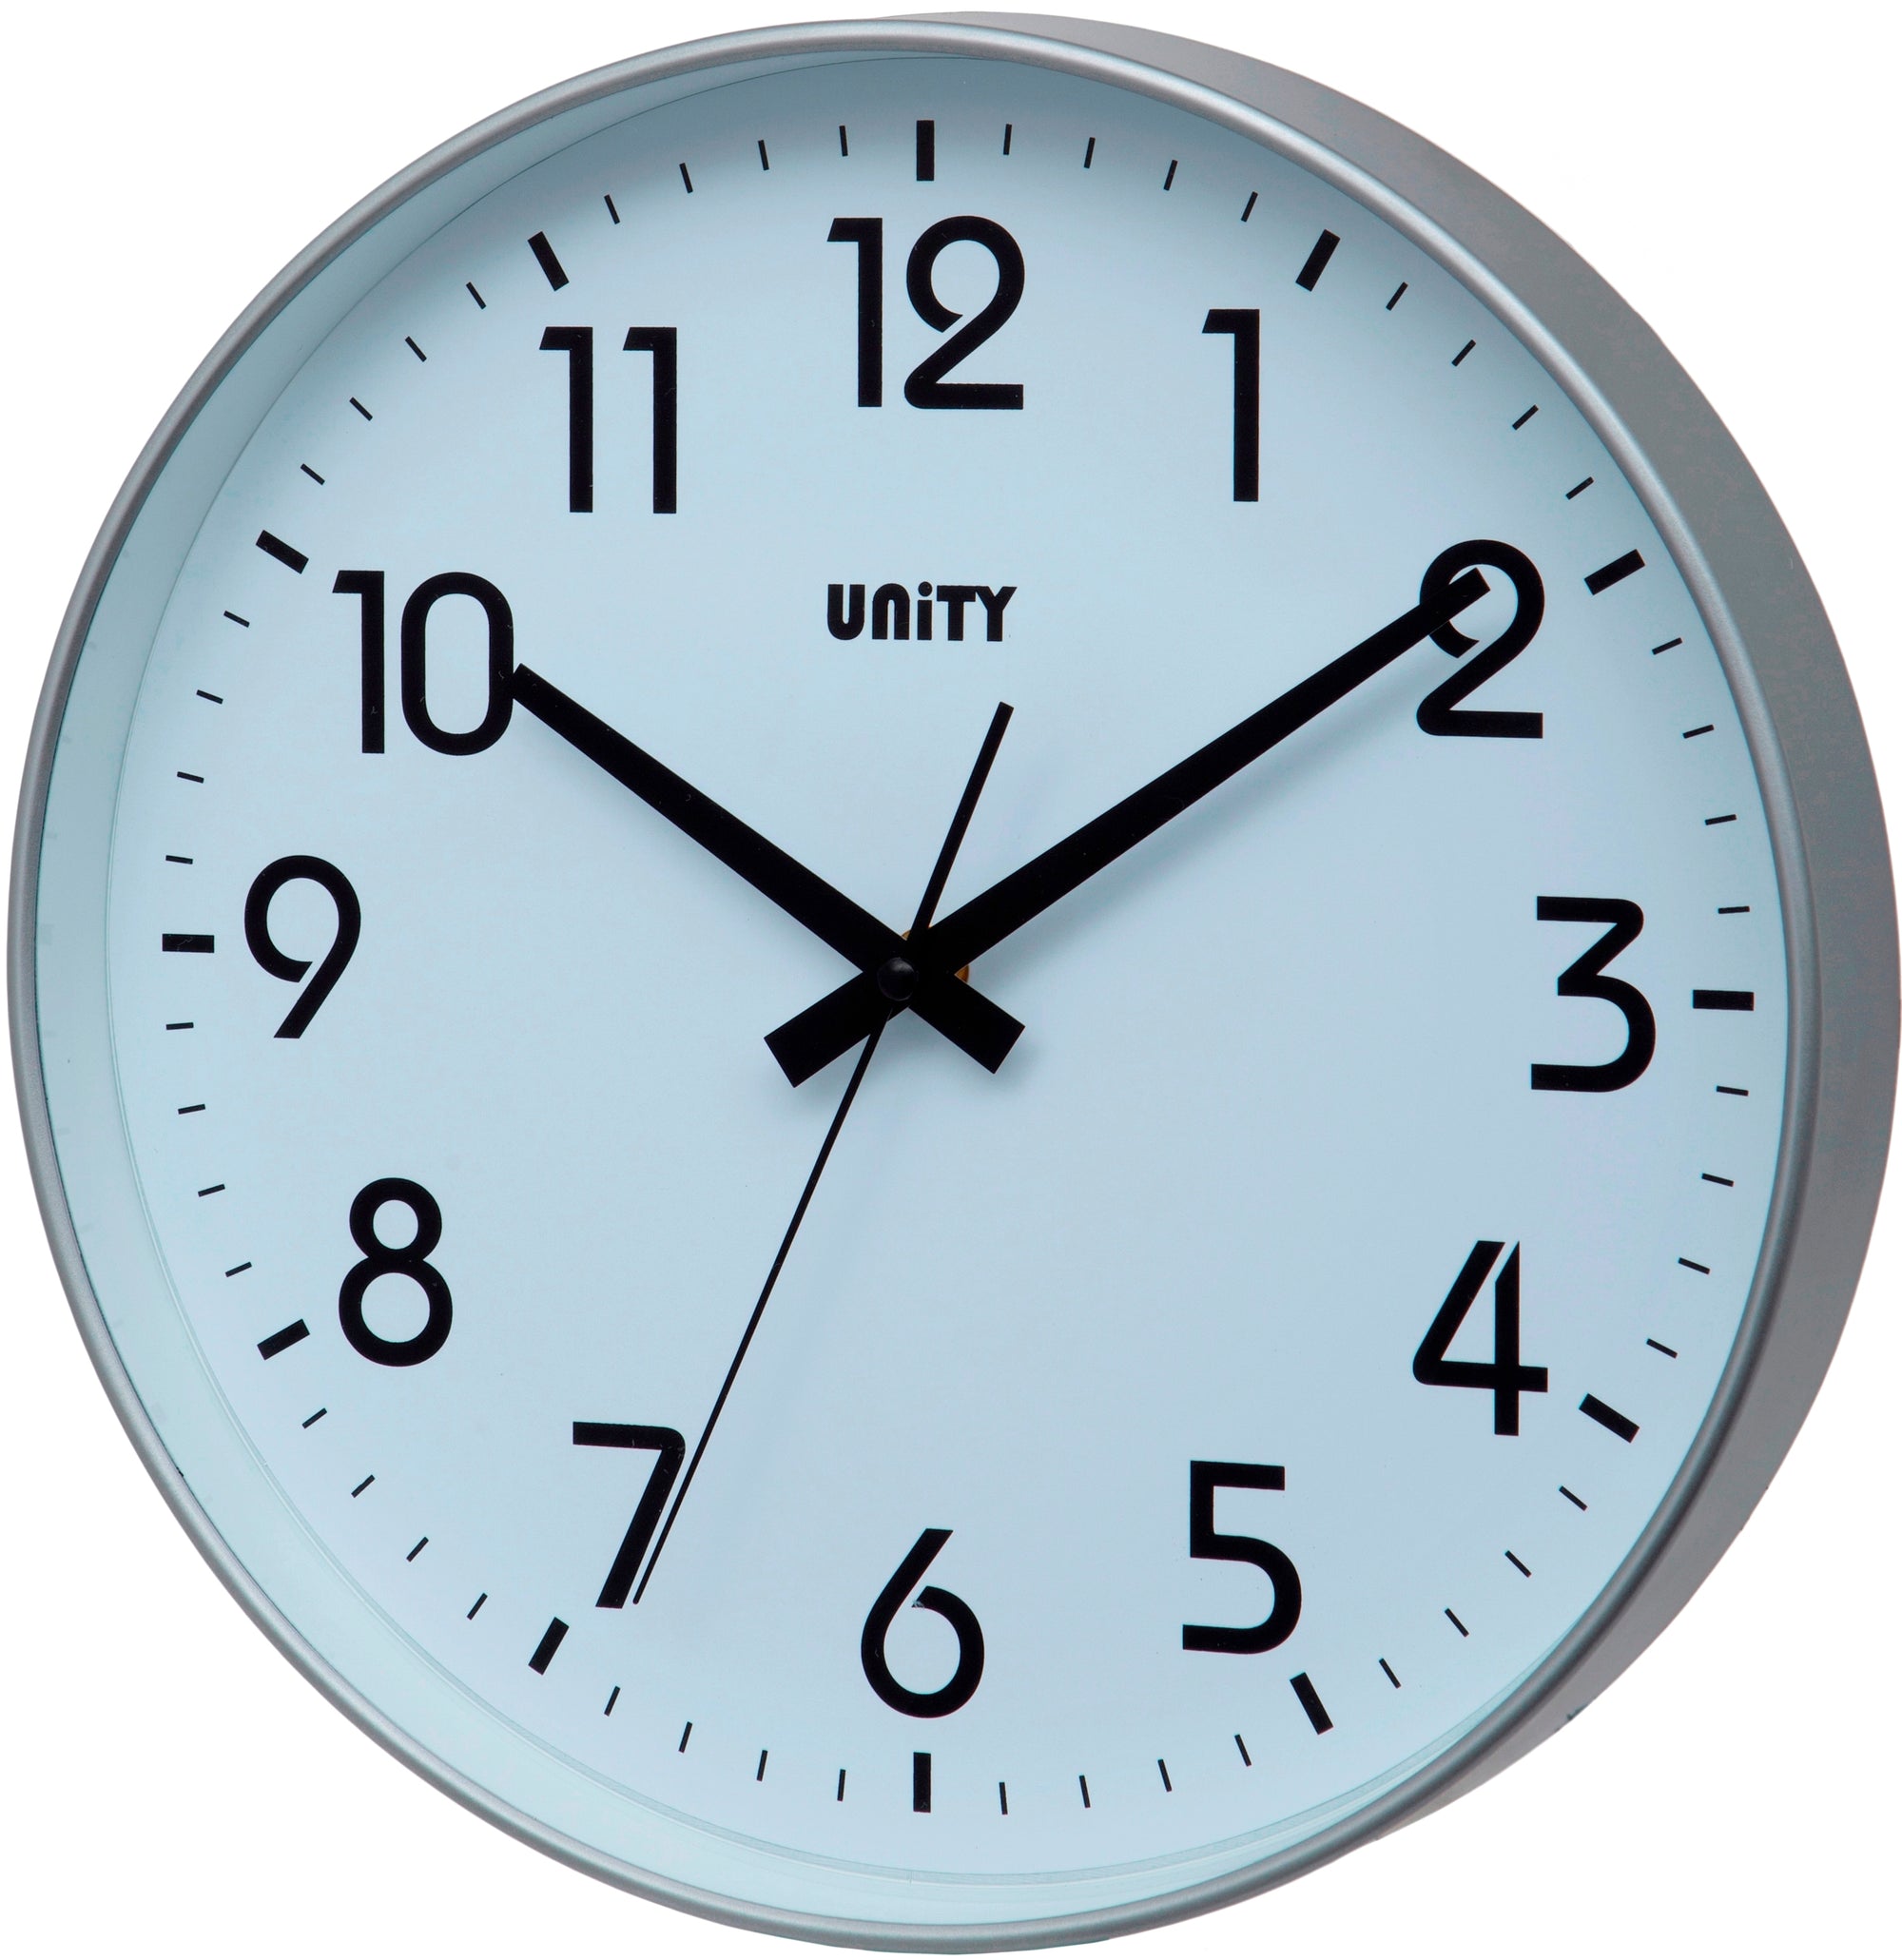 Unity Clocks